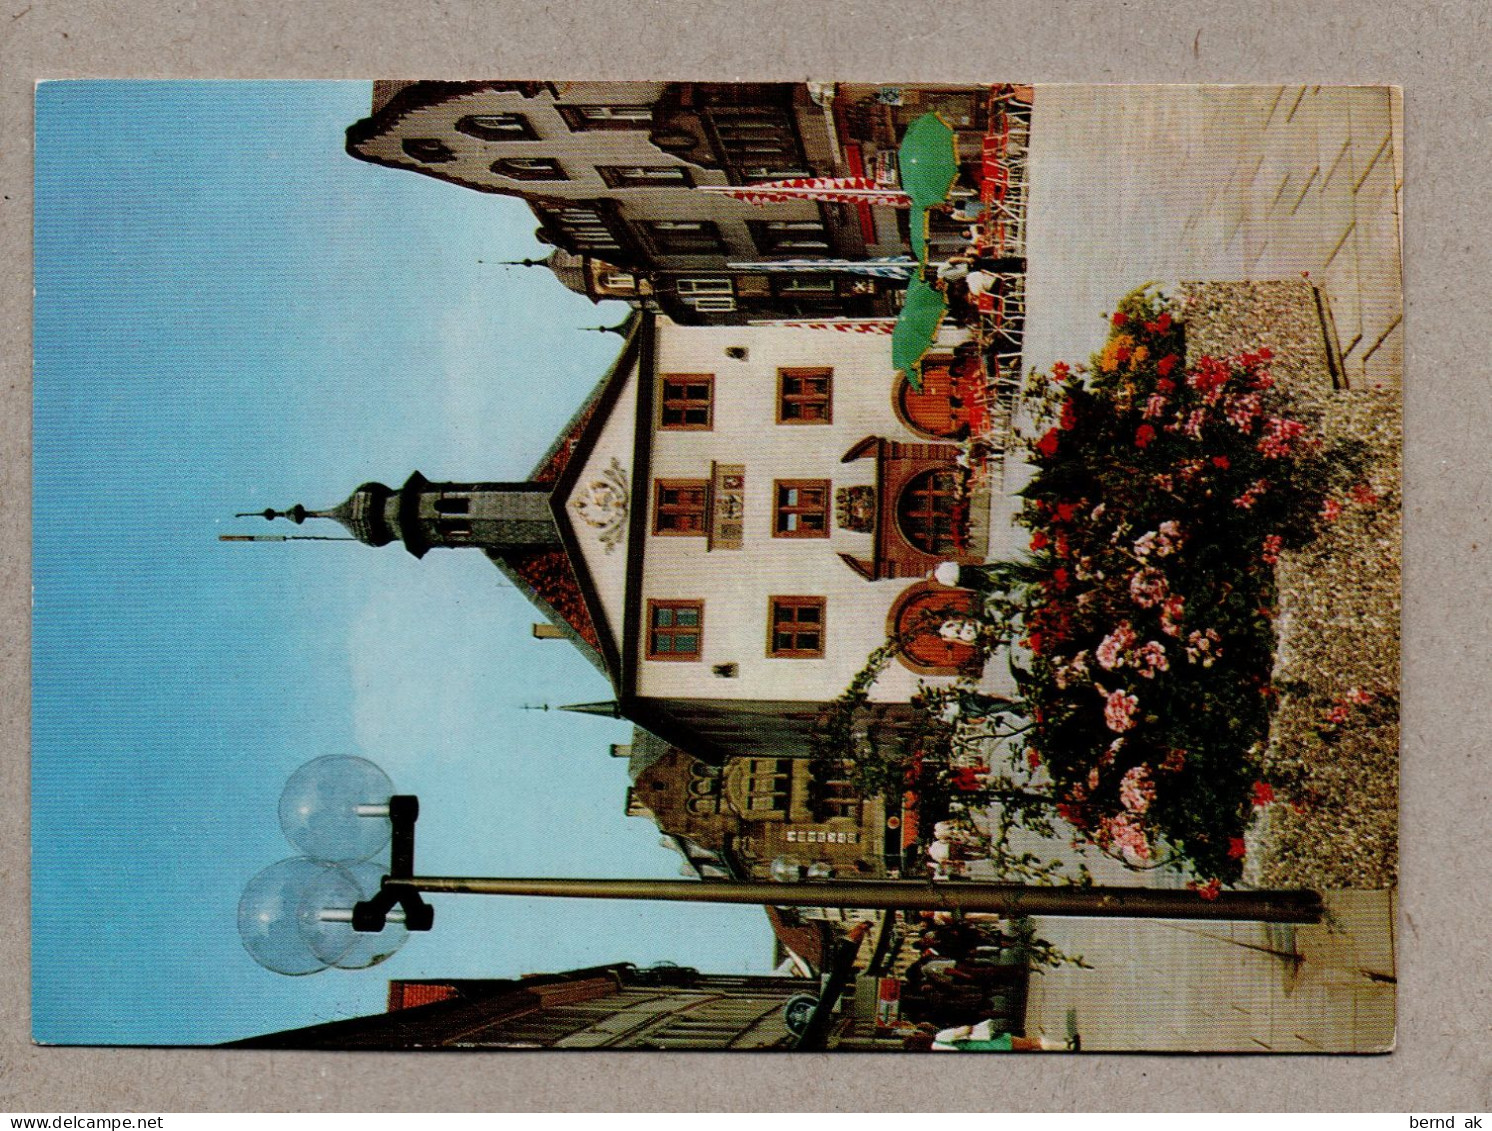 030# BRD - Color-AK : 16 verschied. Karten  - Bad Kissingen (alle im Bild)